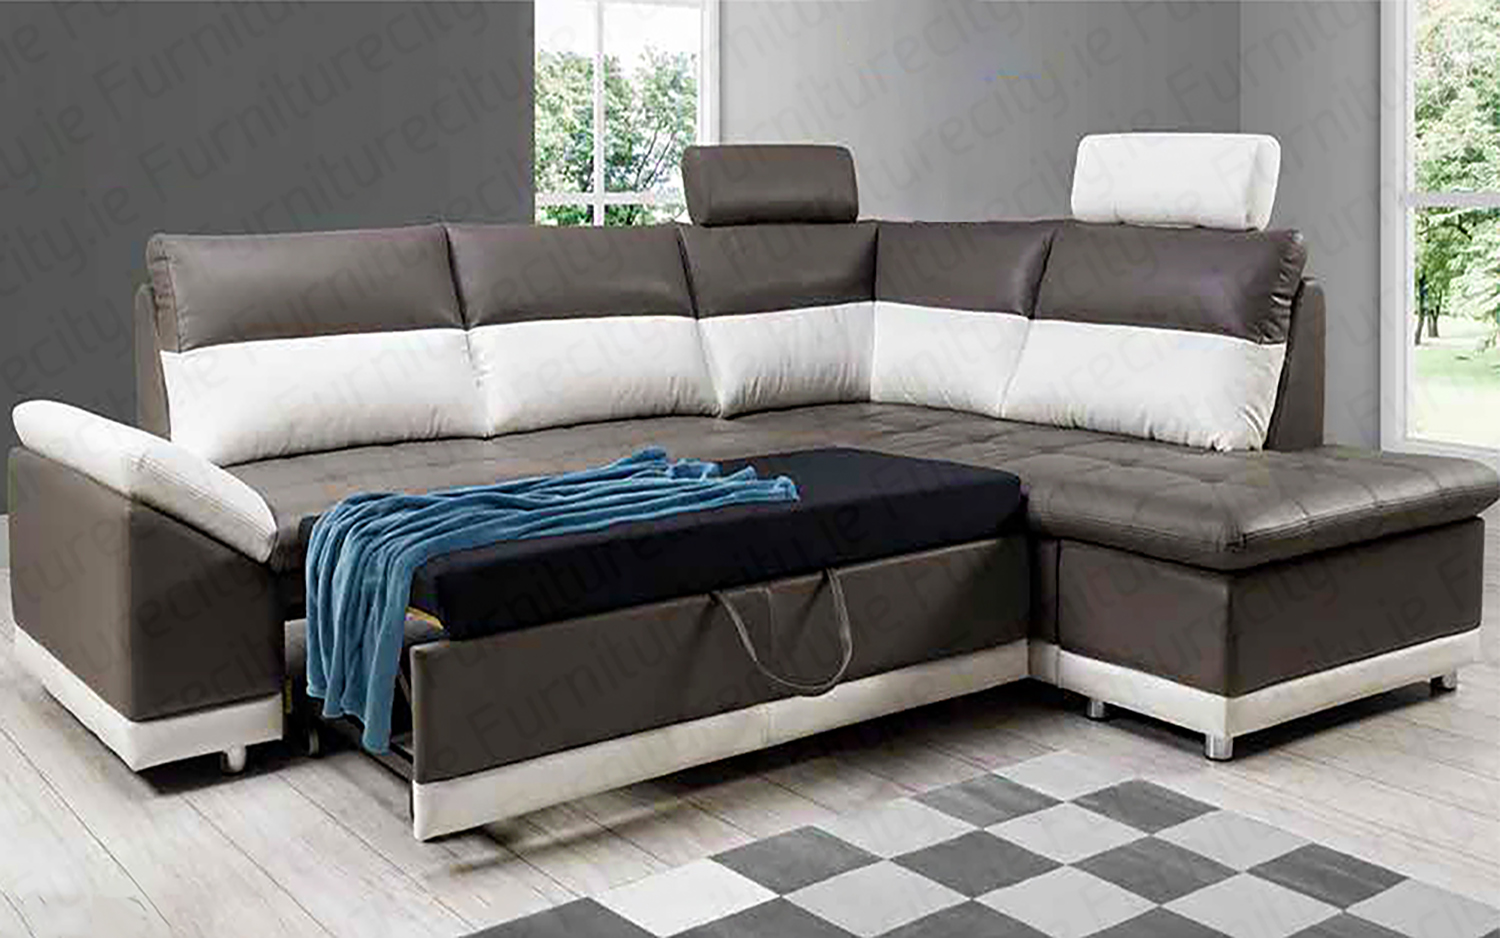 Sofa bed VANILLA OPEN by Furniturecity.ie